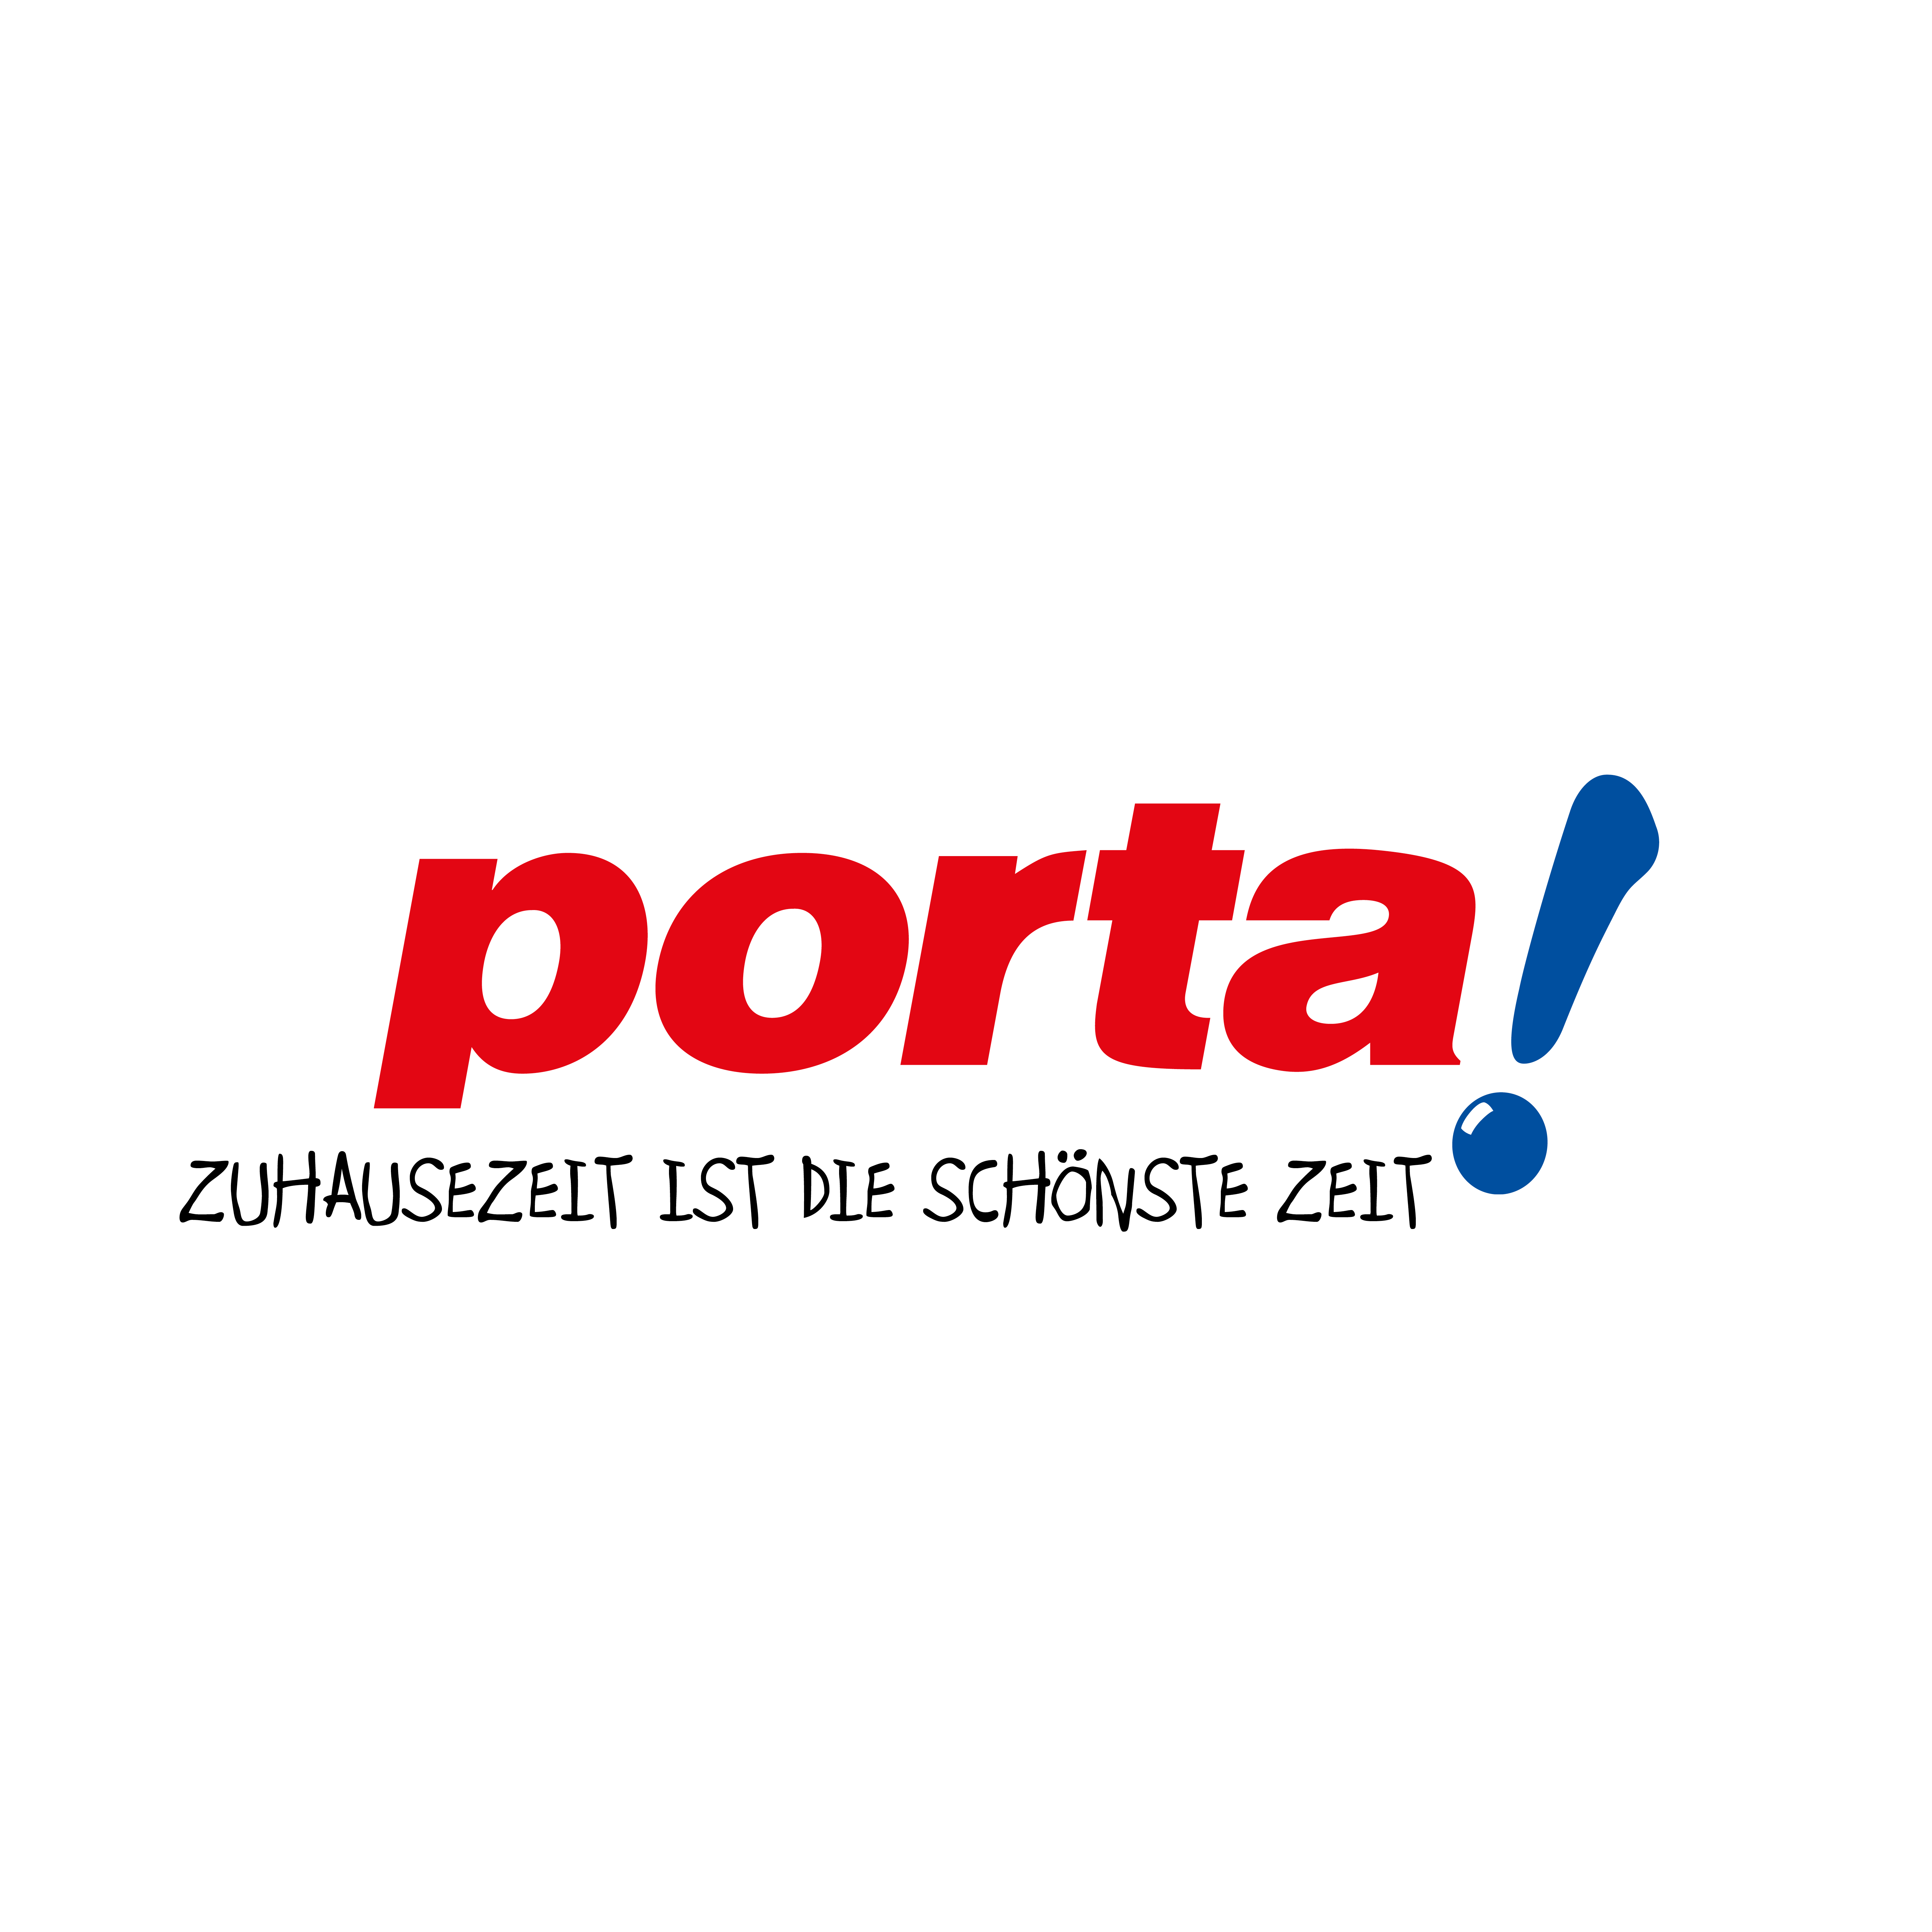 porta_Logo_Zuhausezeit.pn...